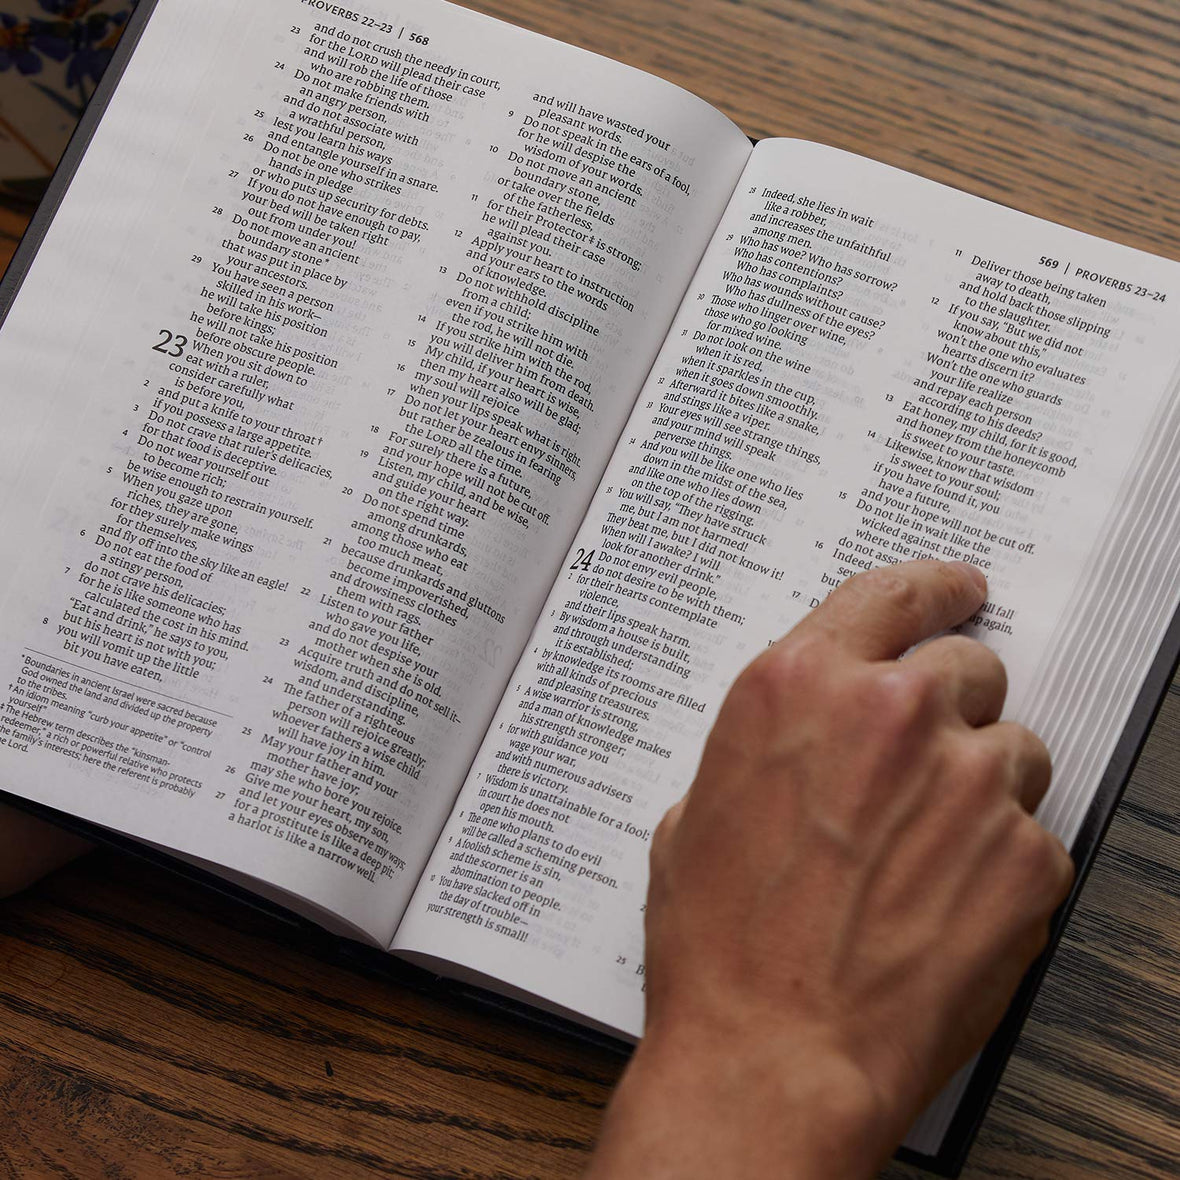 NET Bible, Pew and Worship, Comfort Print: Holy Bible